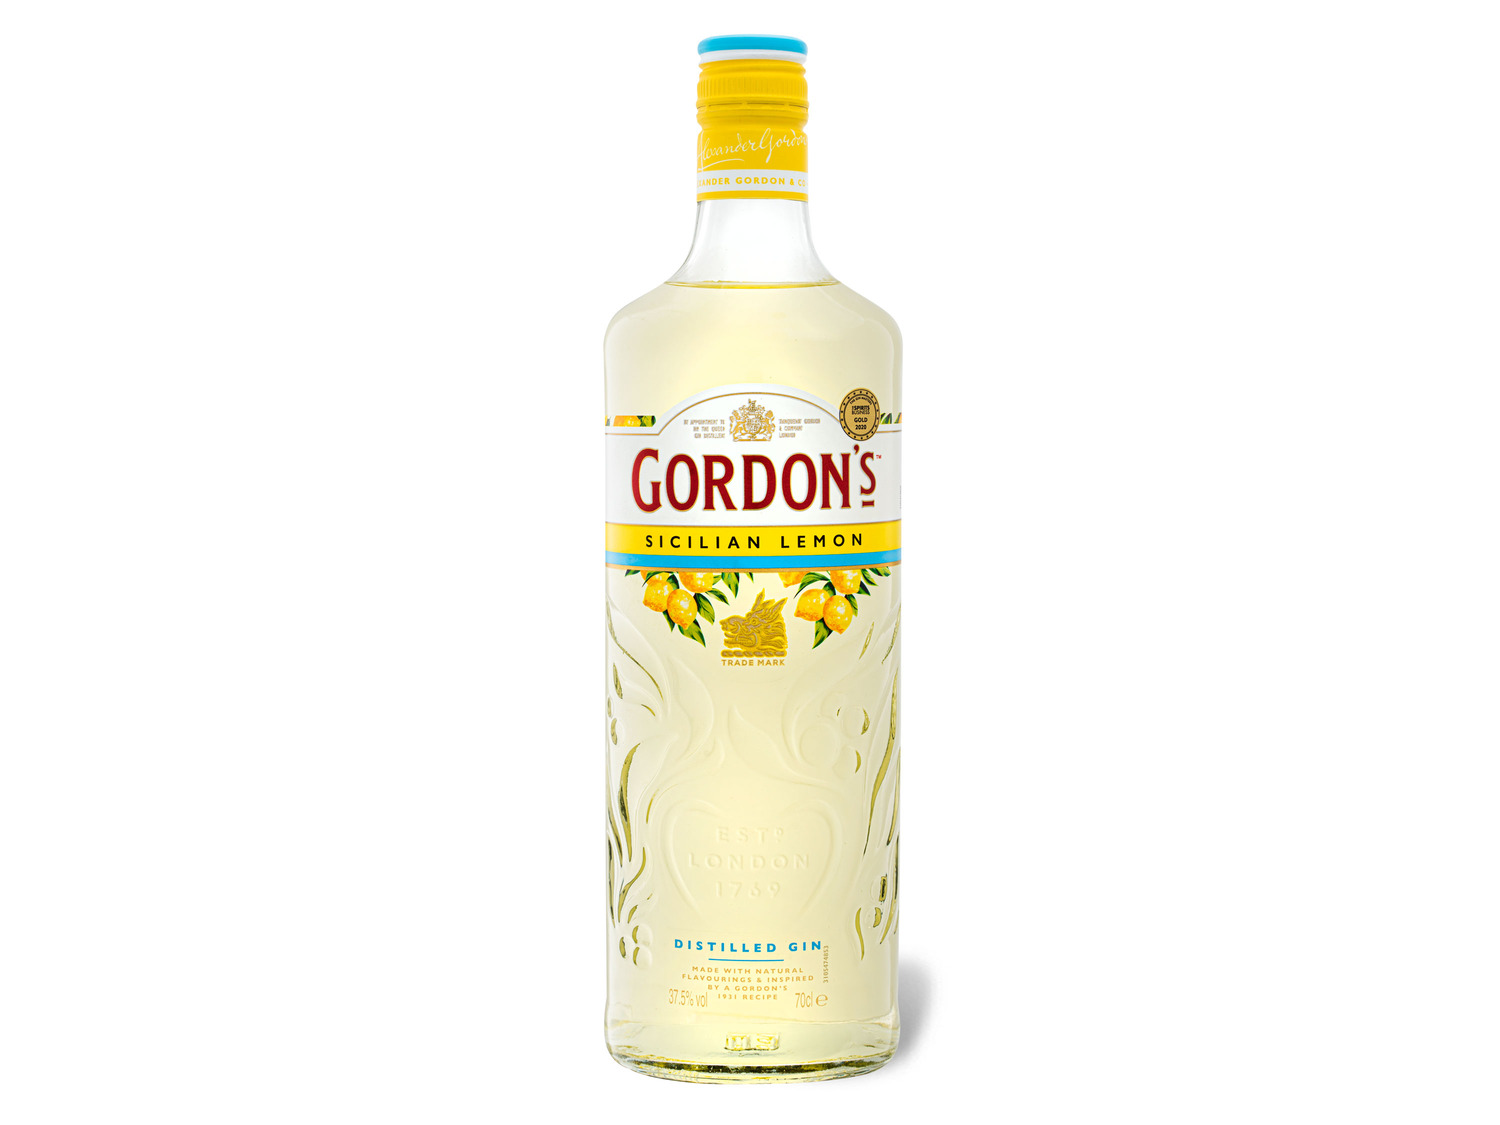 GORDON'S Sicilian Lemon Distilled Gin 37,5% Vol | LIDL